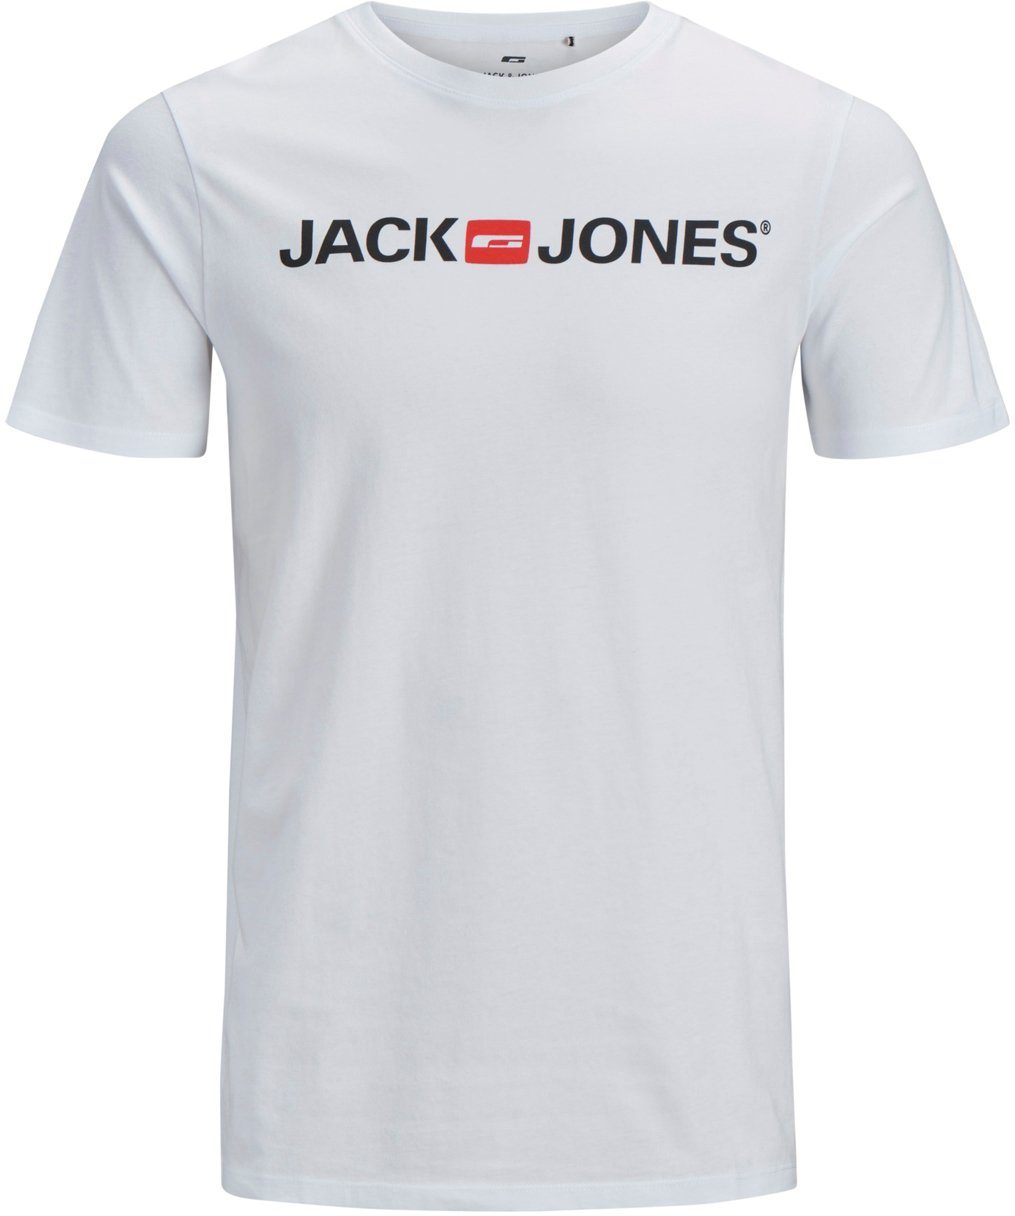 PlusSize CORP T-Shirt Größe Jones Jack 6XL & LOGO bis weiß TEE